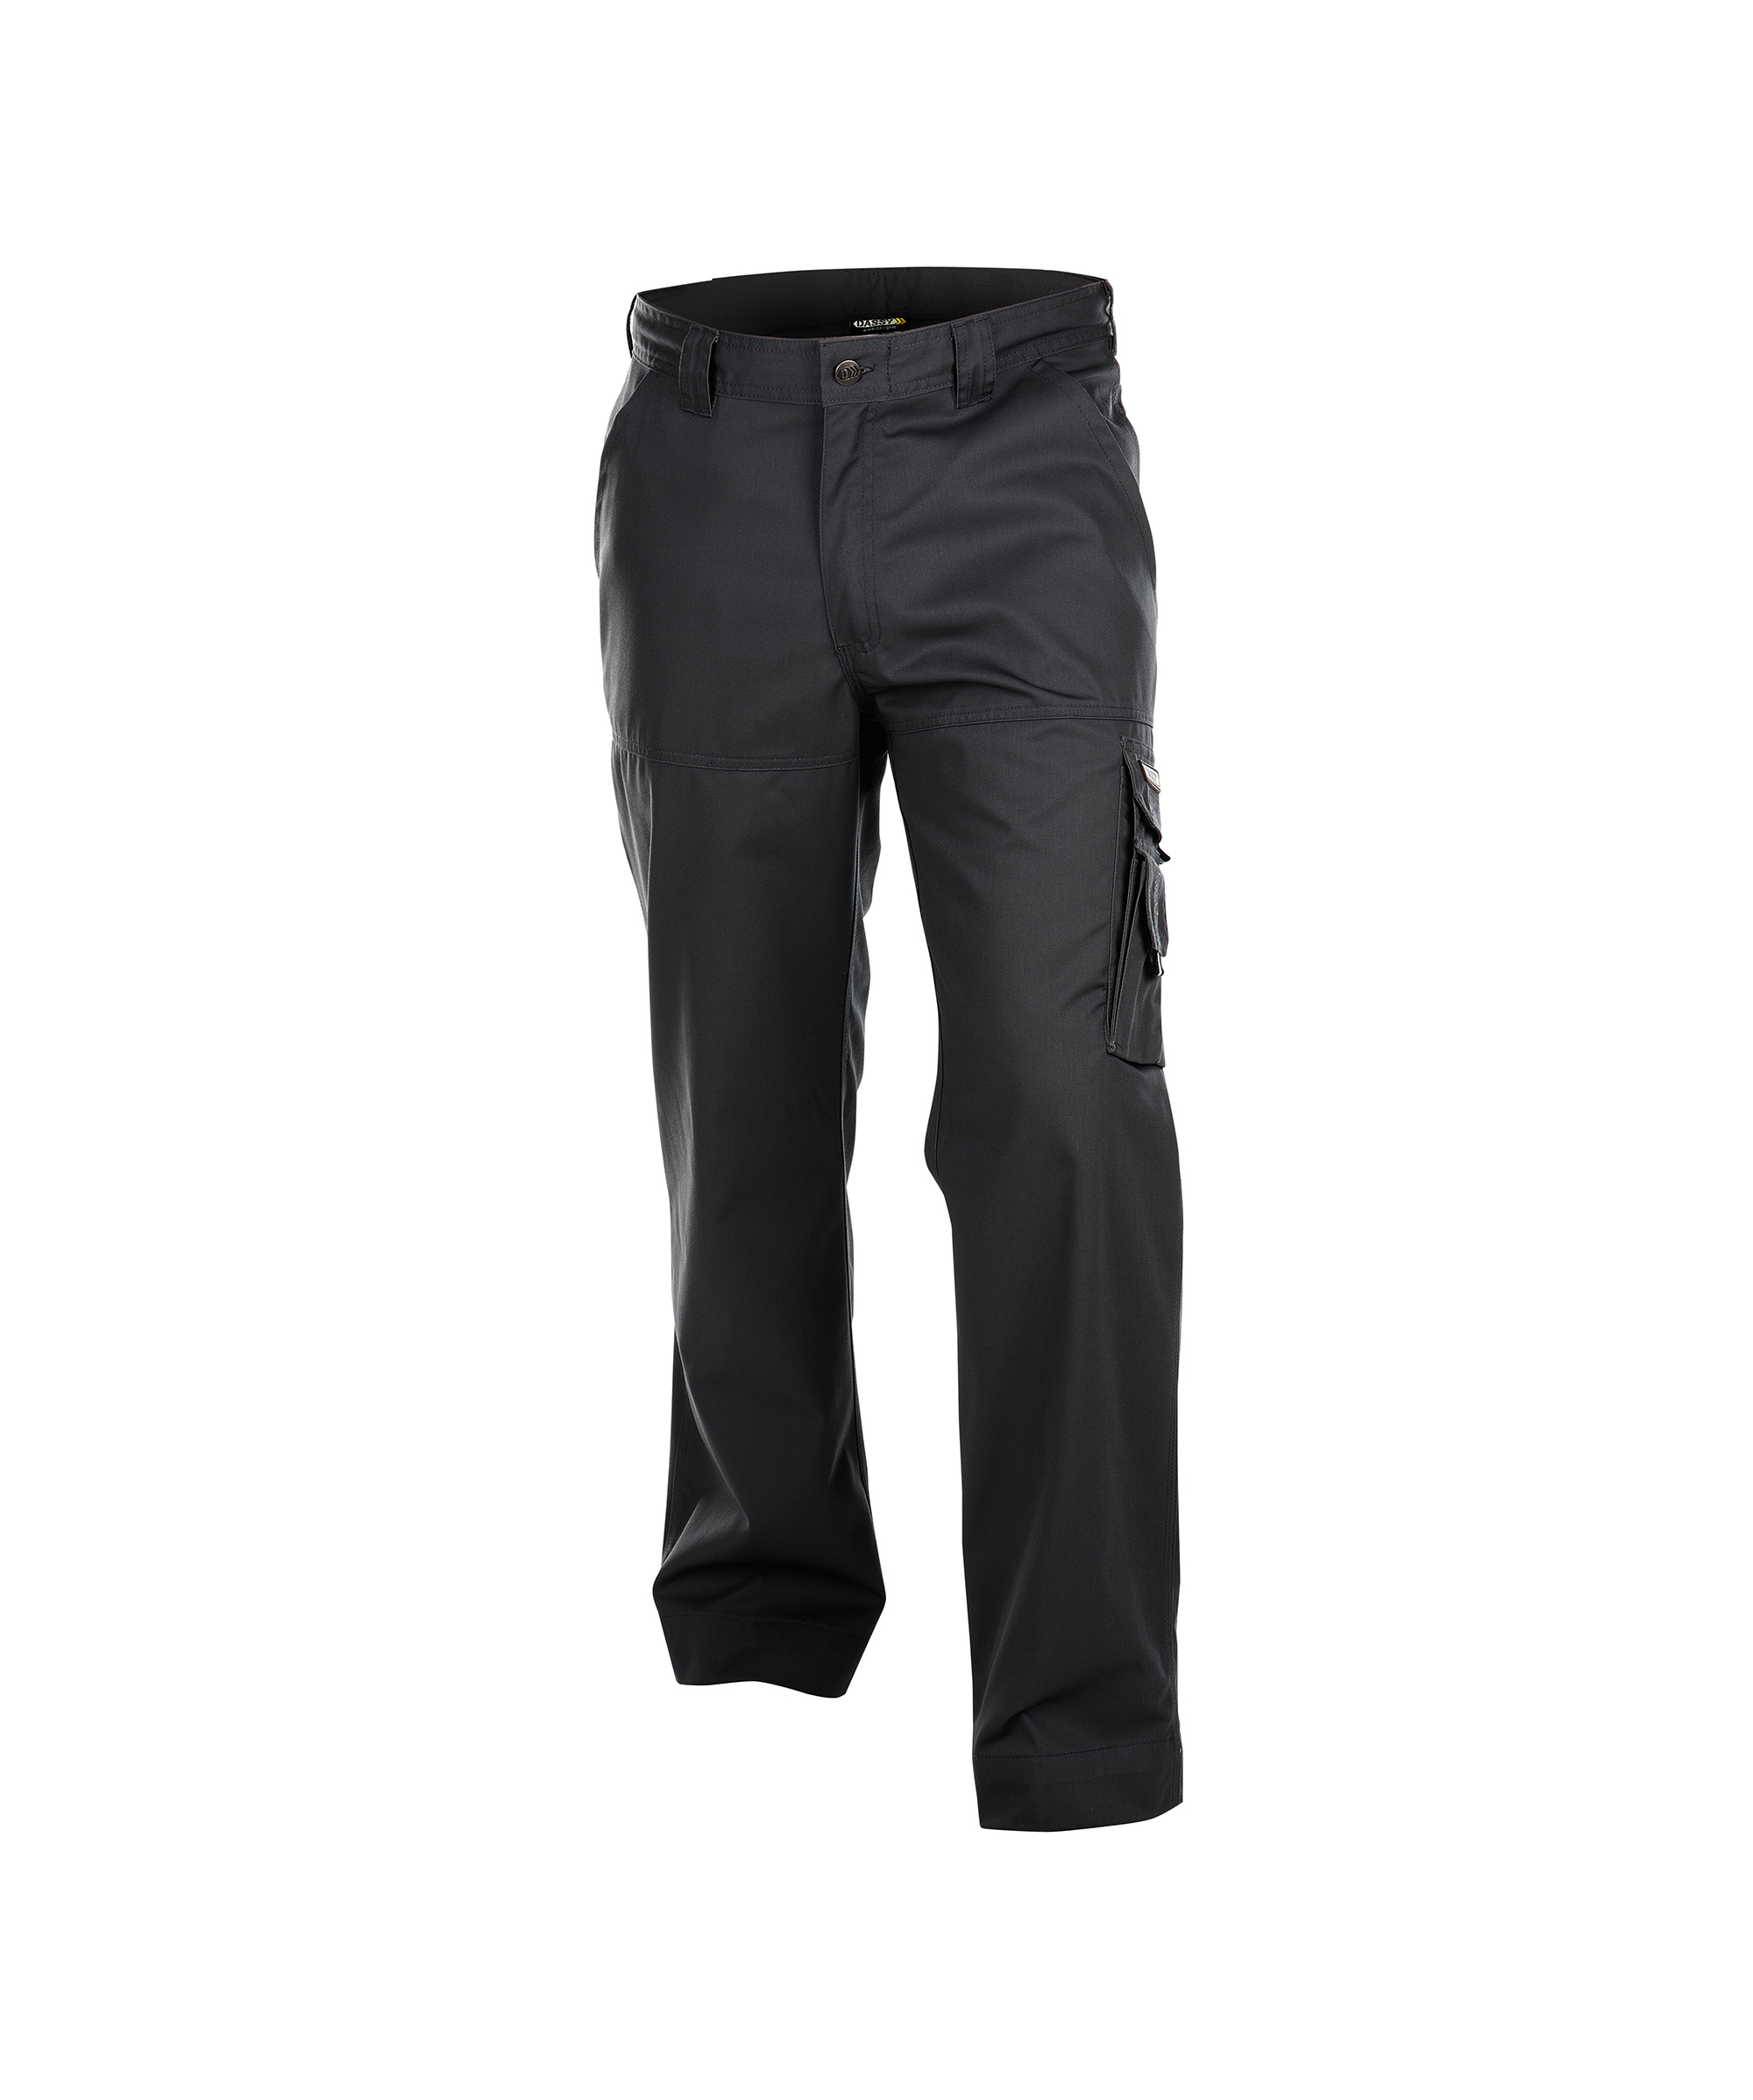 LIVERPOOL-Women_Work-trousers_black_FRONT.jpg